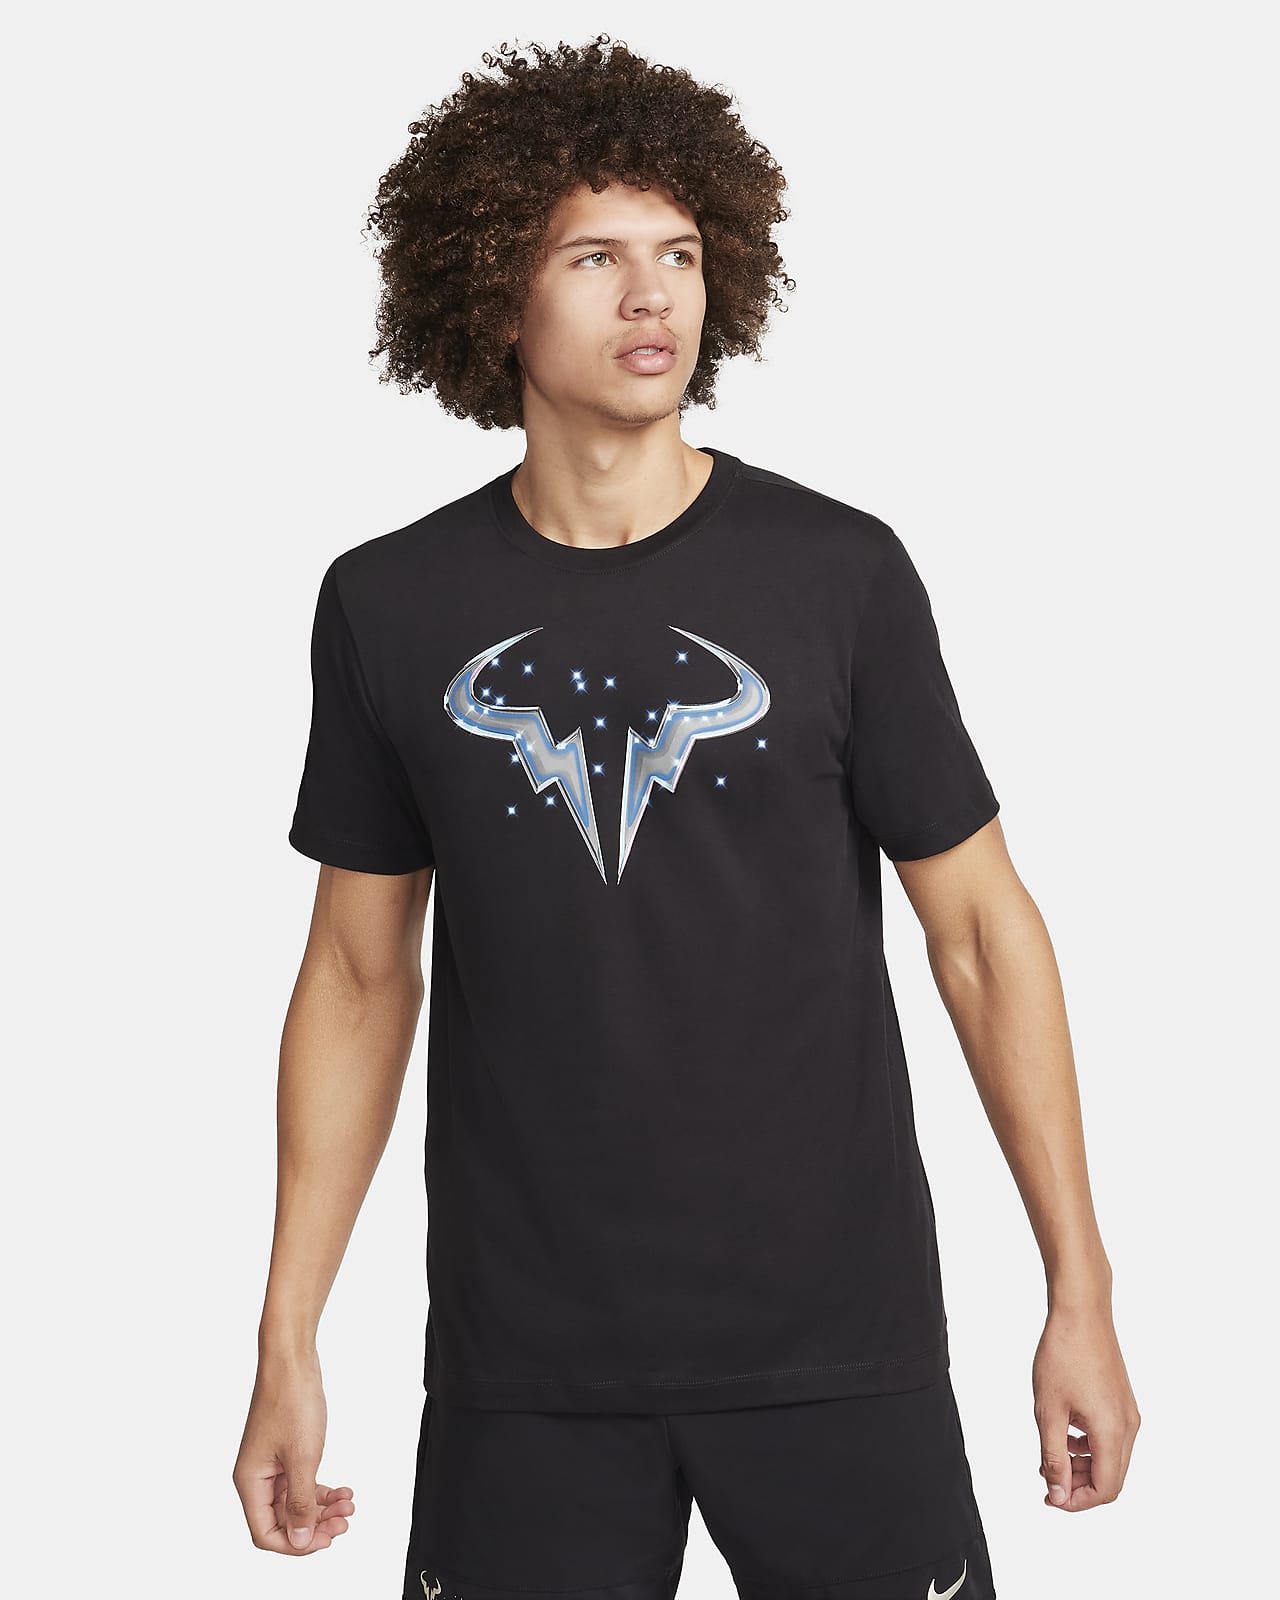 Rafa Men's NikeCourt Dri-FIT T-Shirt